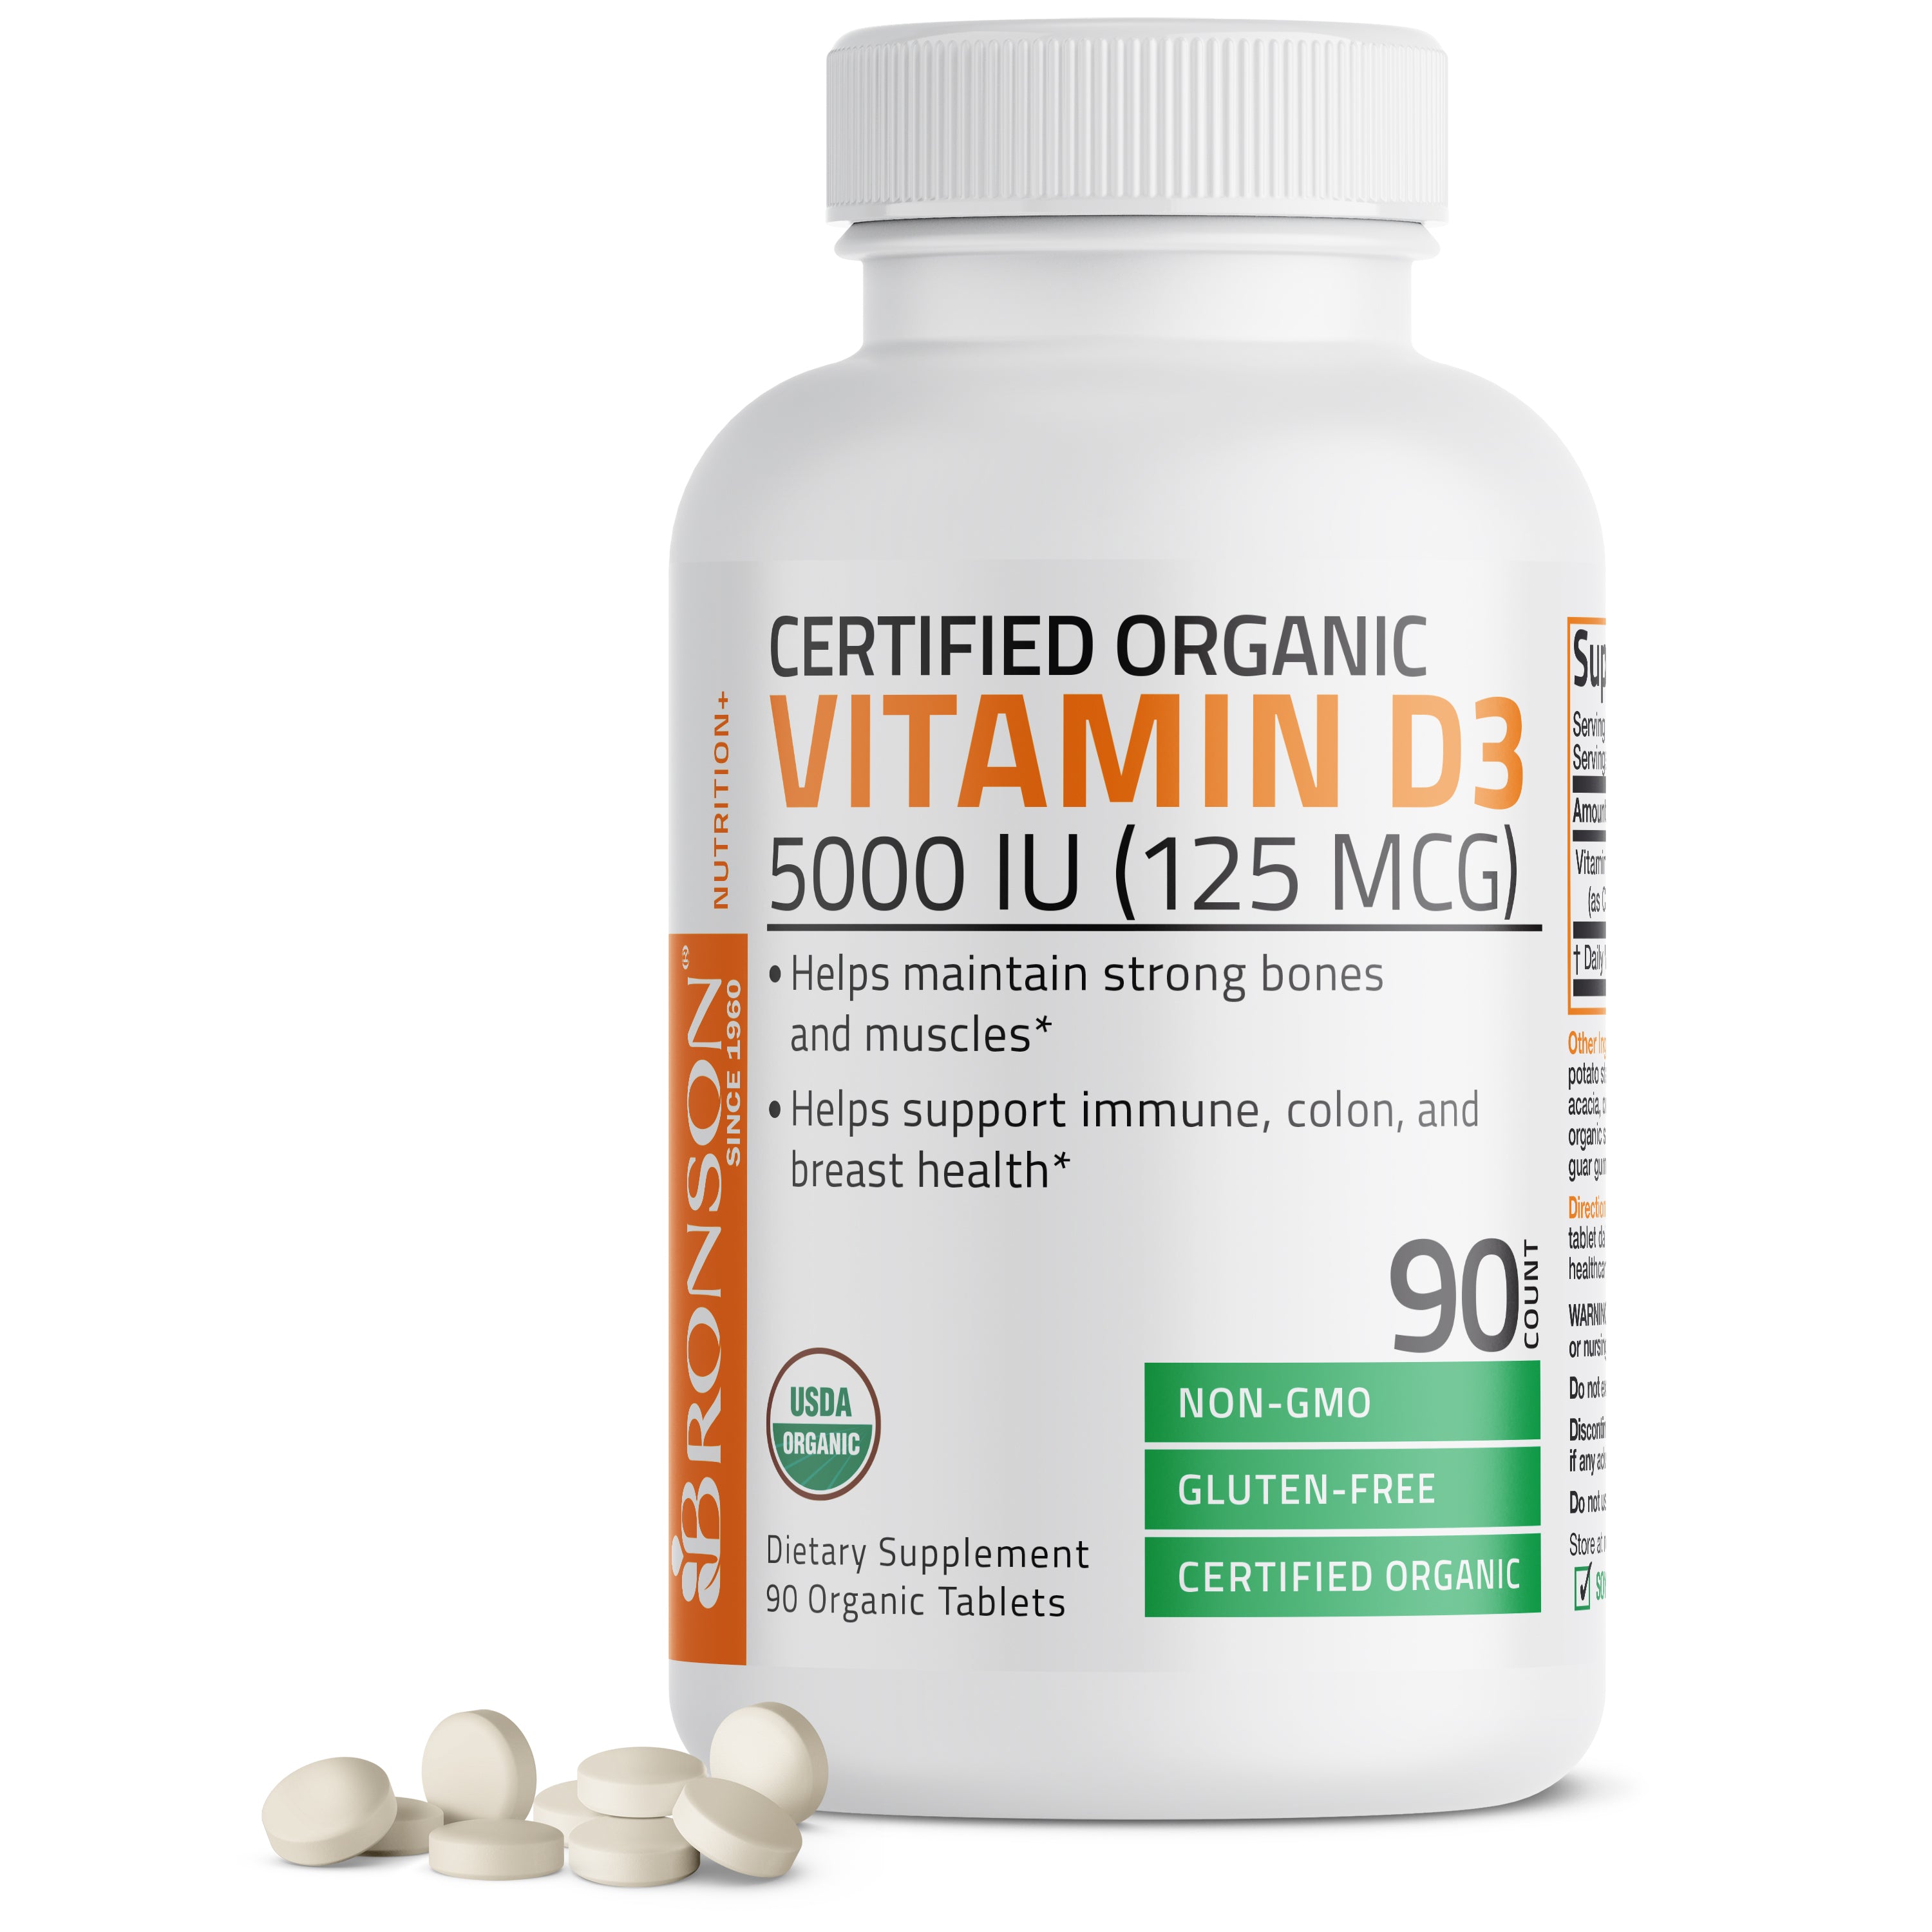 Vitamin D3 USDA Certified Organic - 5,000 IU view 1 of 6